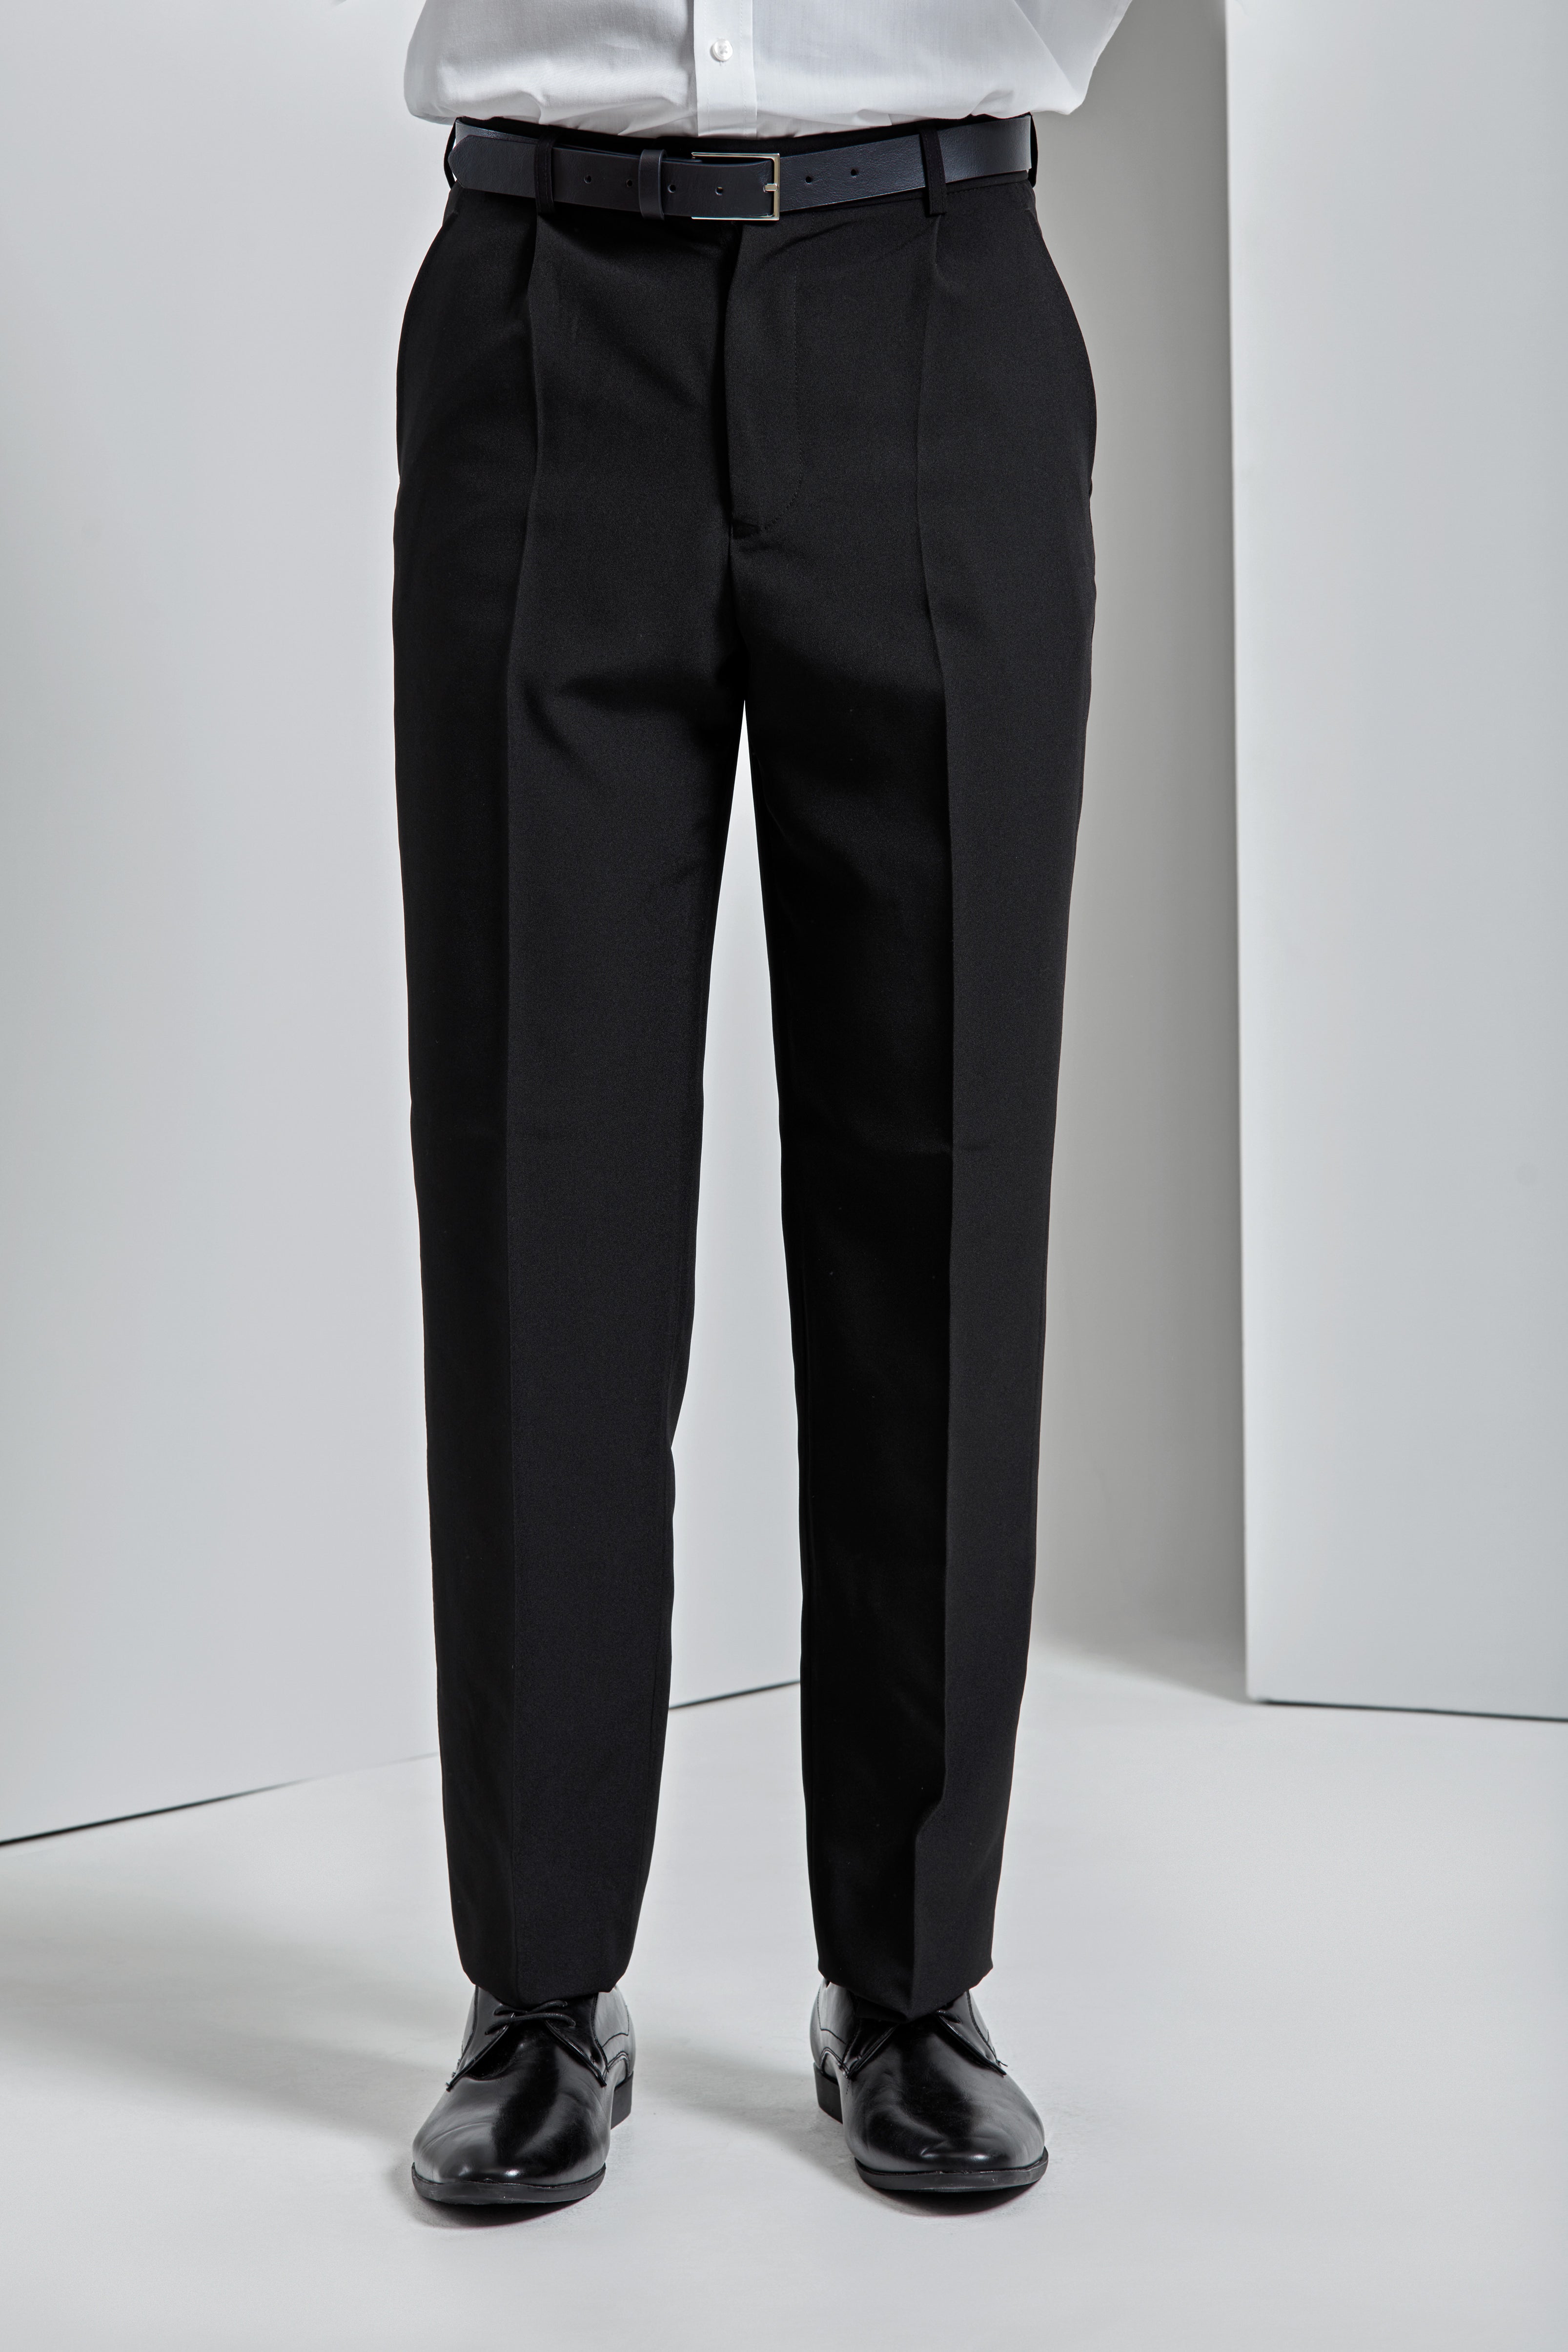 Domenico Tagliente Black Polyester Tapered Dress Men's Pants | Polyester  dress pants, Dress pants, Men dress